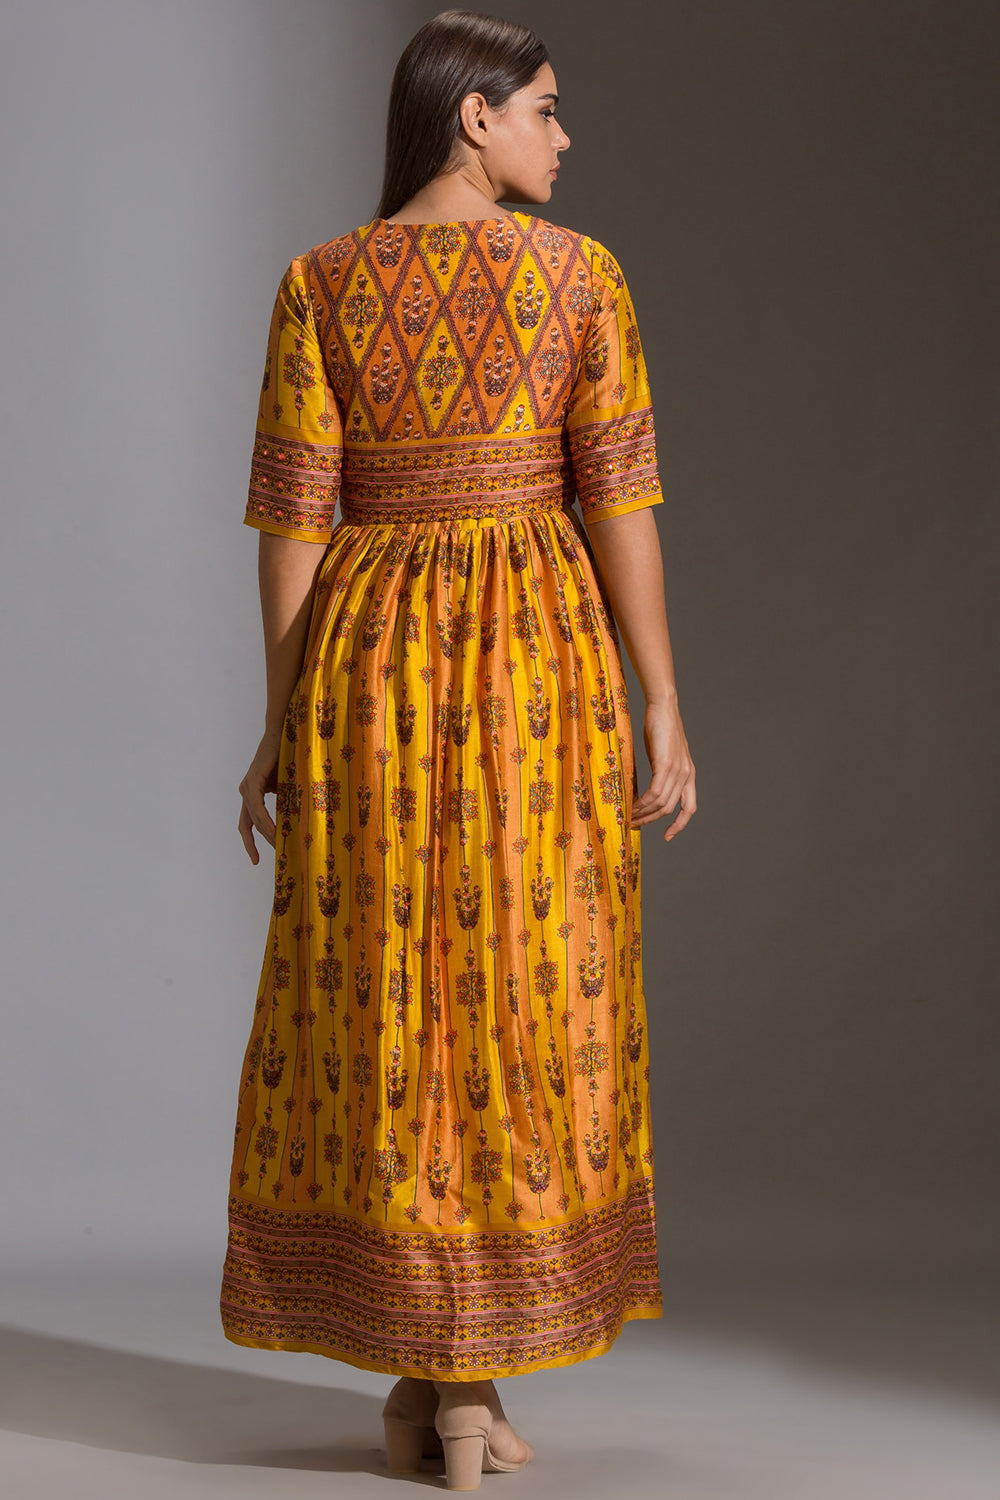 Tilfi Intricate Printed Dress And Jacket